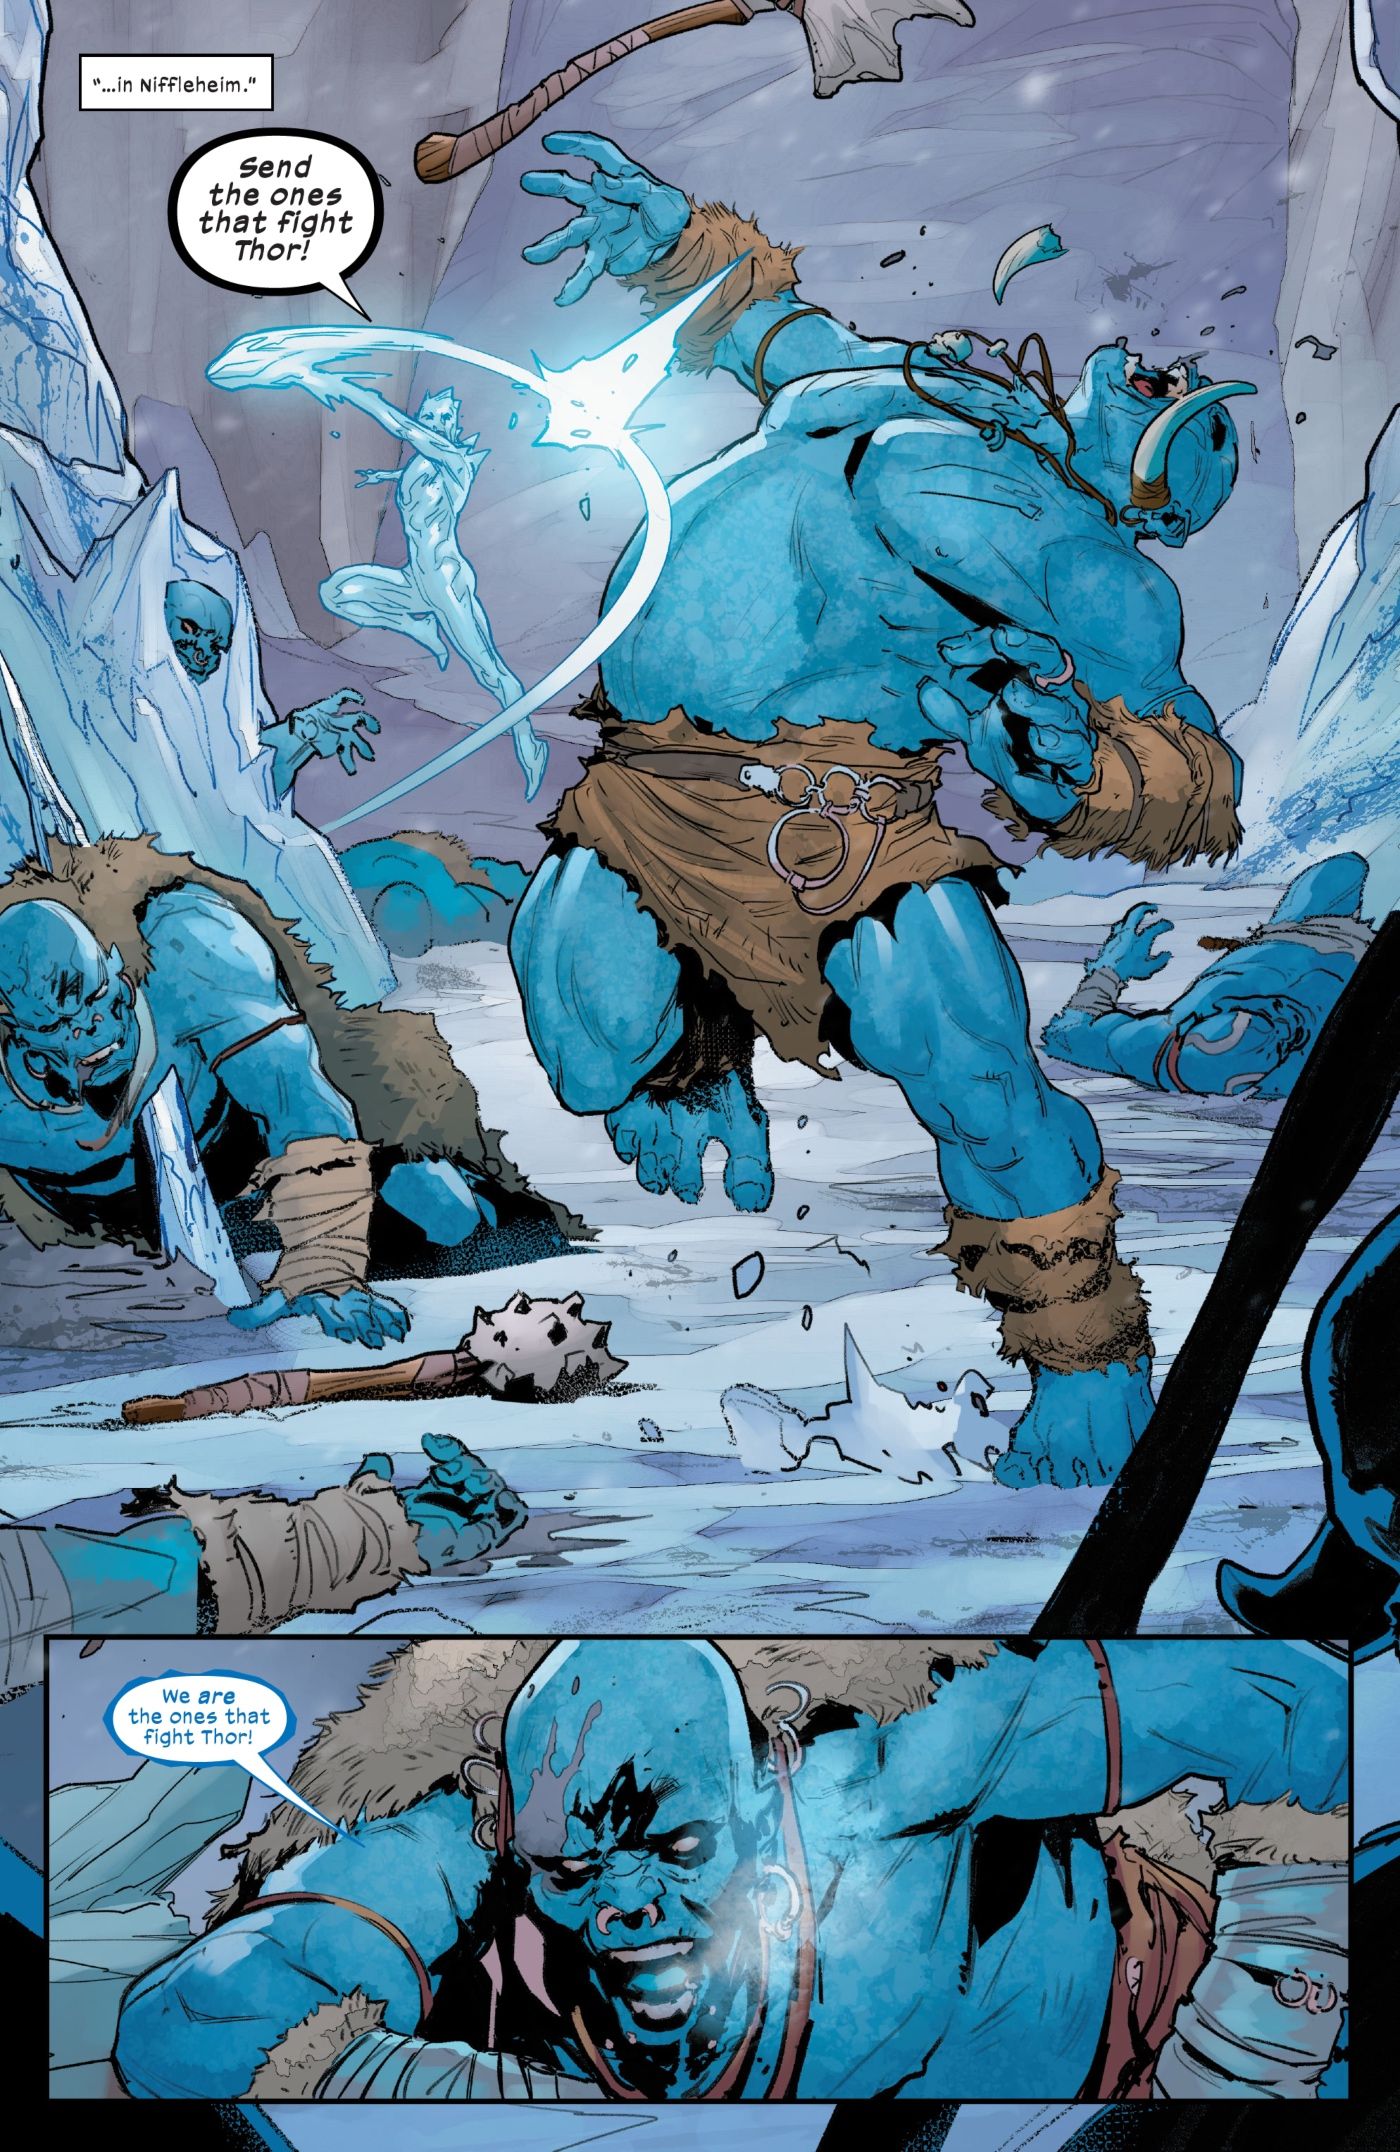 X-Men’s Iceman Proves He Is A Cosmic-Level Hero